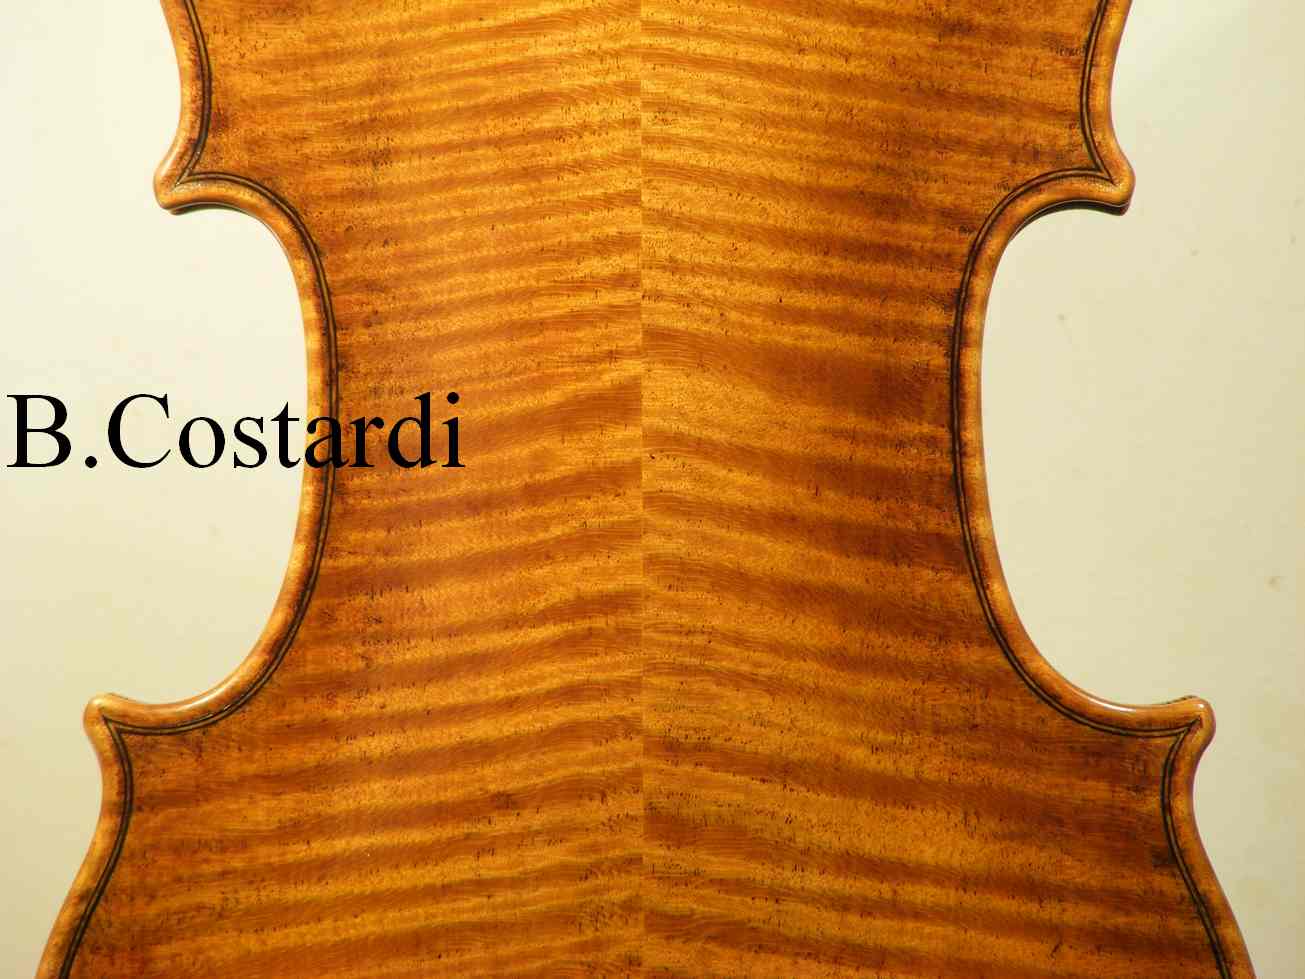 Fine italian violin varnish